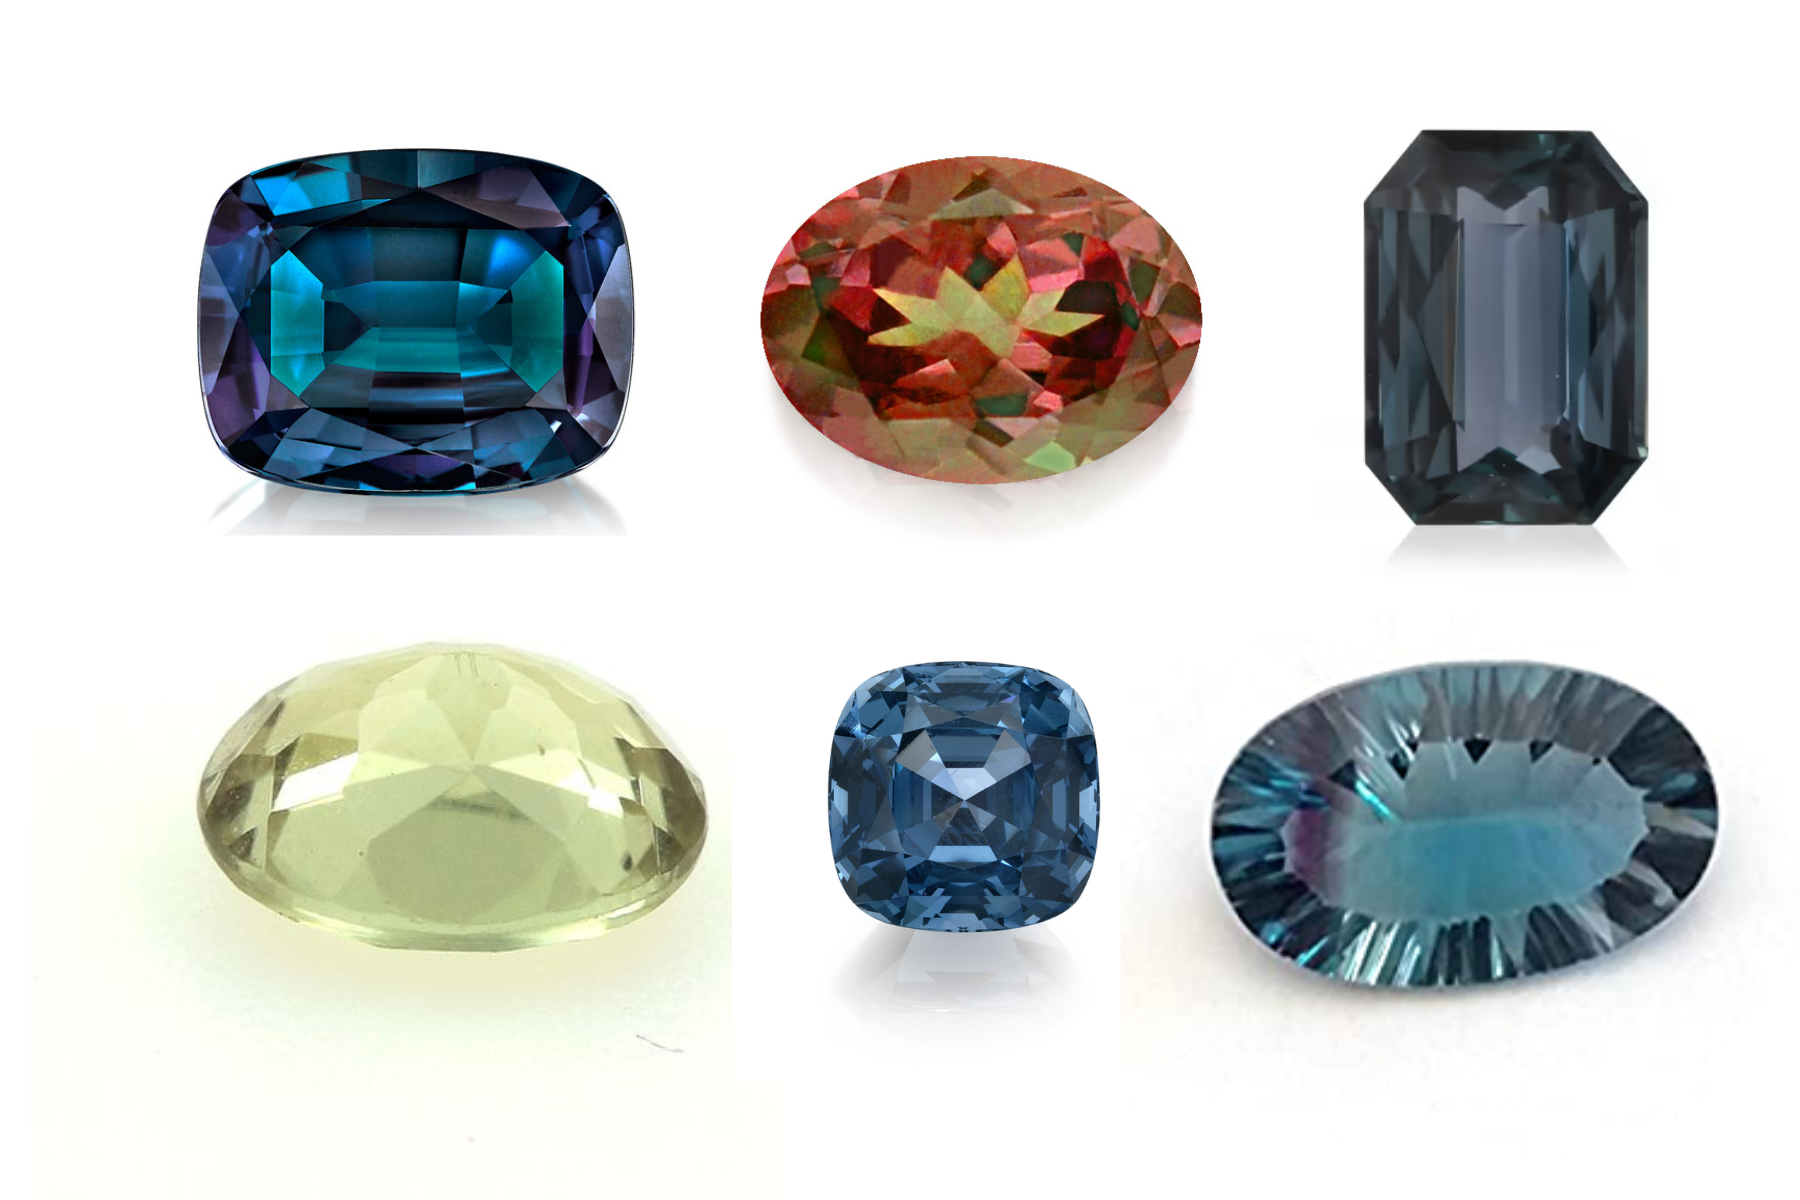 Six types of colot-changing gemstones, the Alexandrite, Garnet, Sapphire, Diaspore, Spinel, and Fluorite